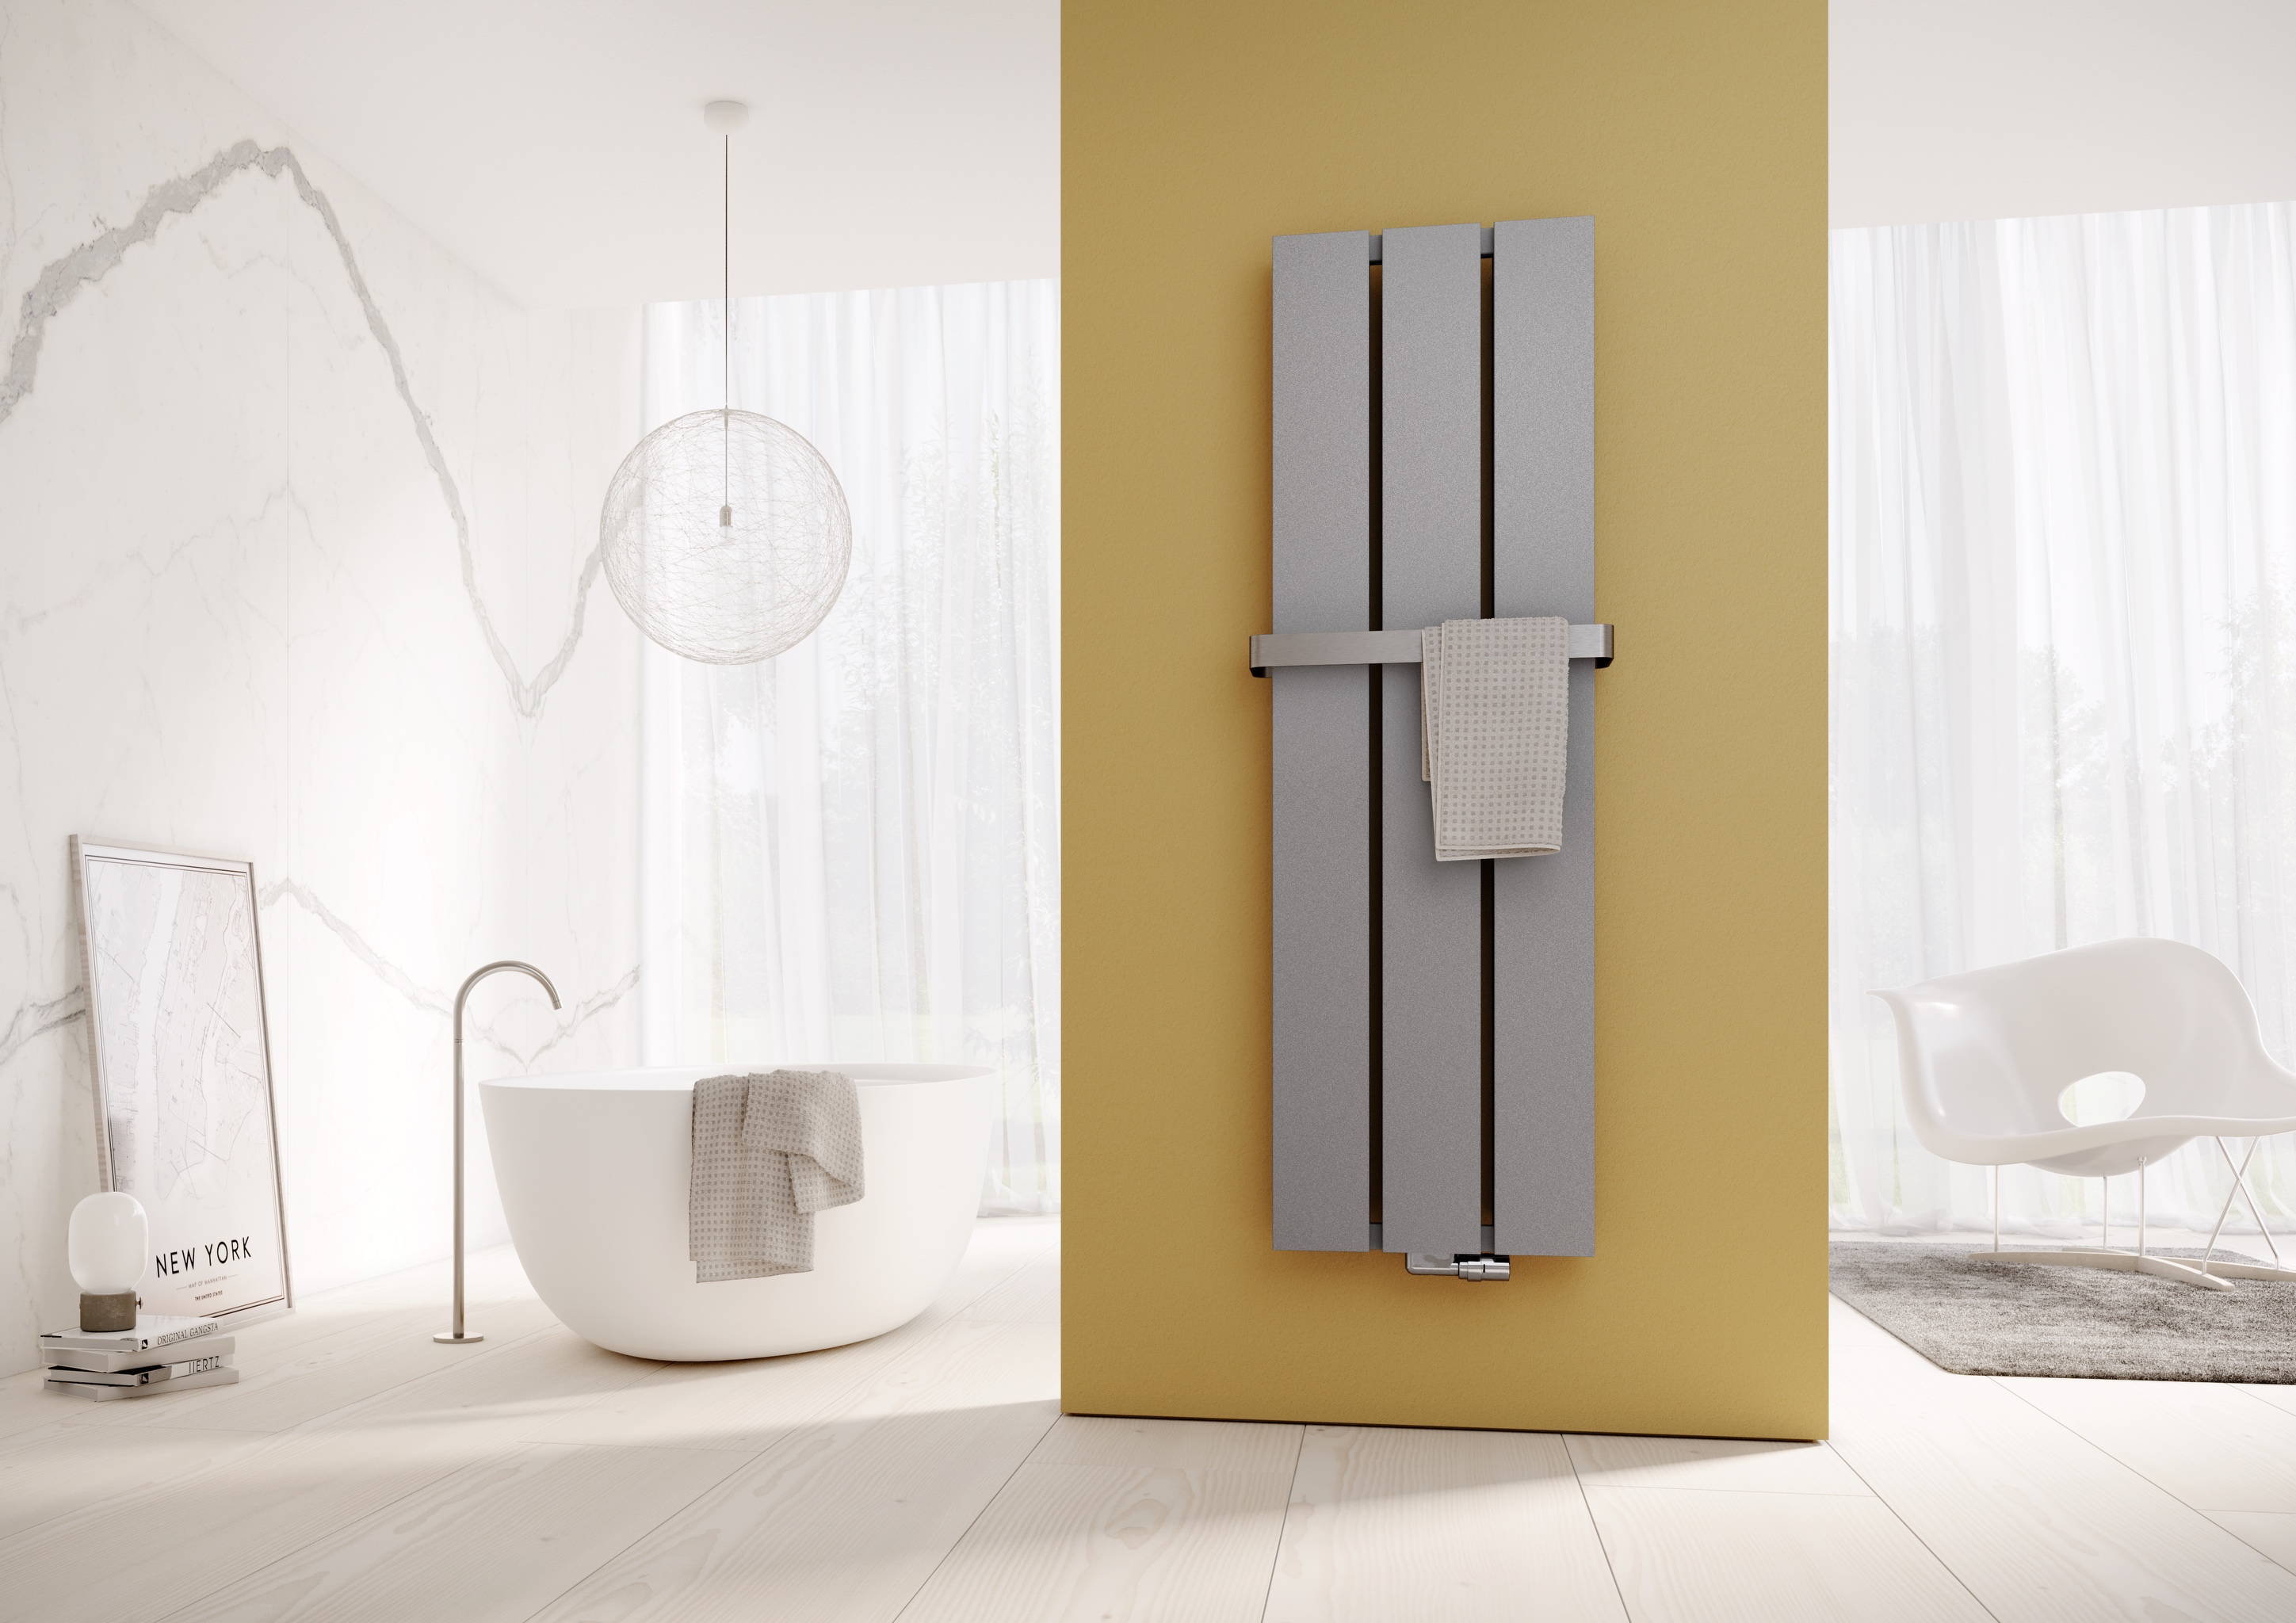 Kermi Design-Heizkörper „Decor-Arte® Plan“ zwei Panele 32 × 180 cm in Weiß